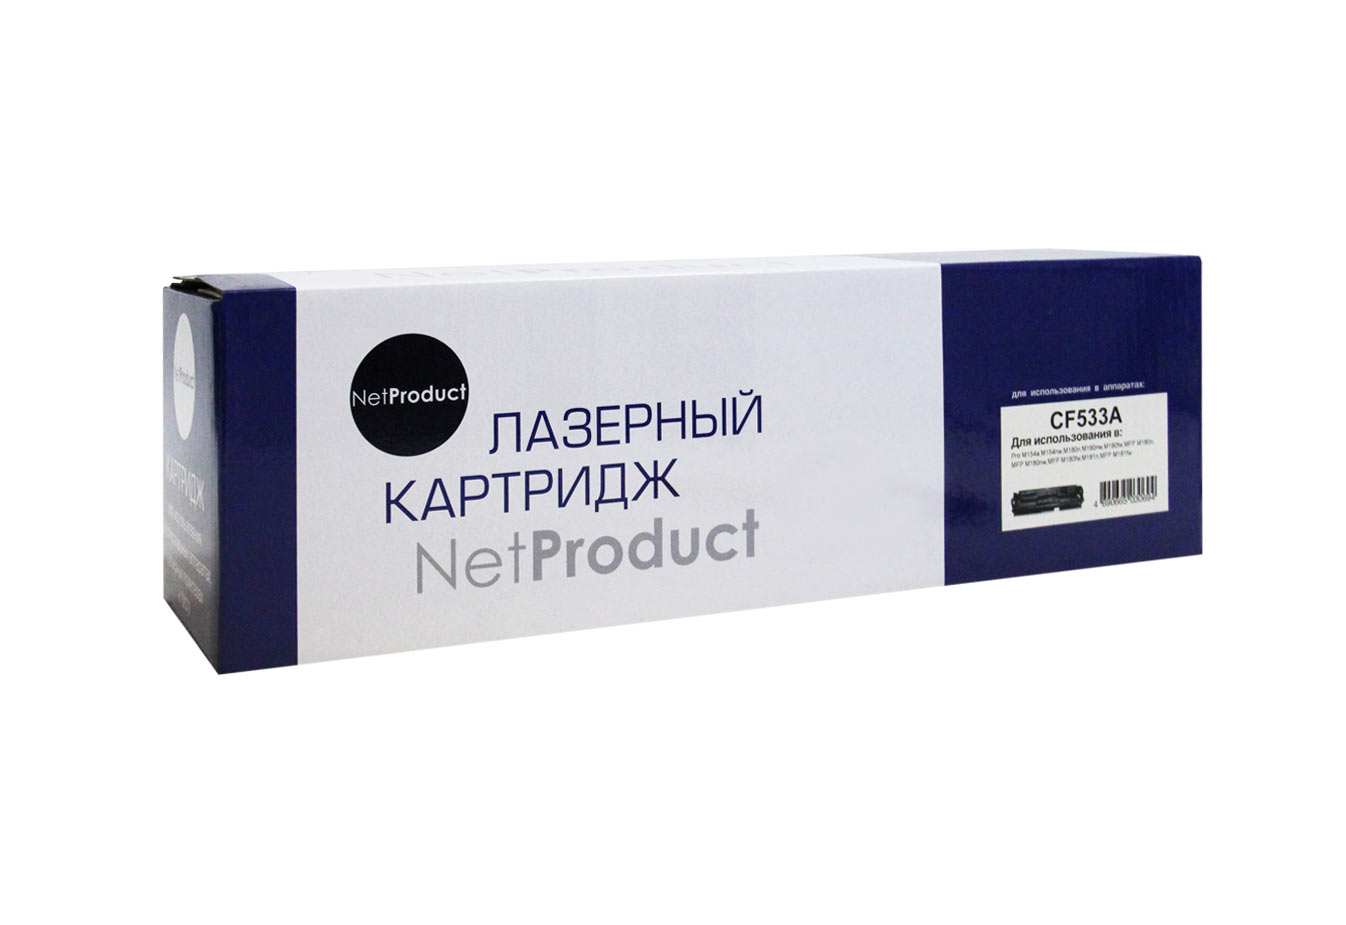 Картридж NetProduct (N-CF533A) для HP CLJ Pro M154A/M180n/M181fw, M, 0,9K - купить с доставкой по России